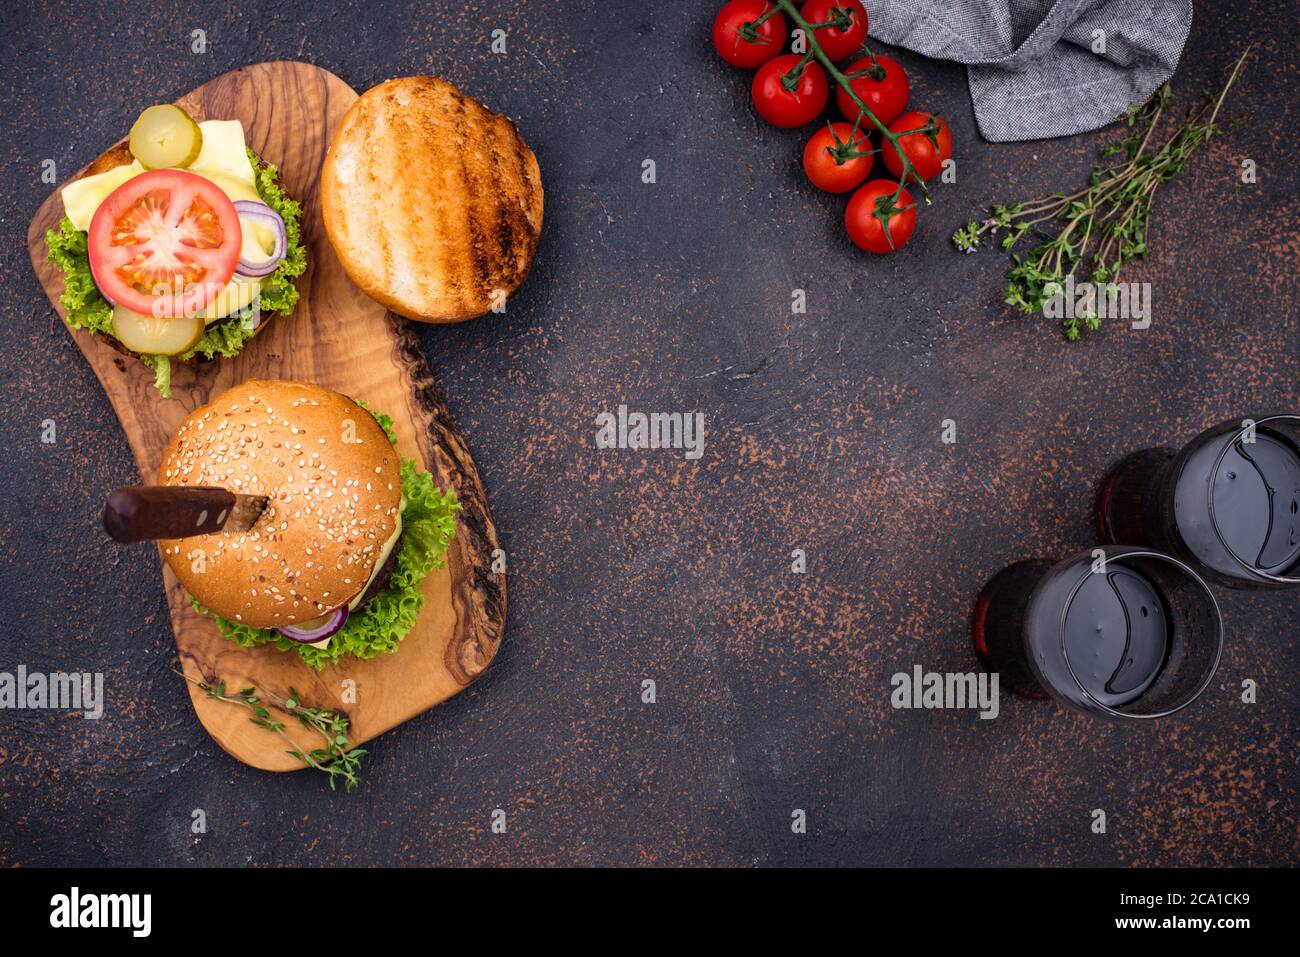 Burger and cheeseburger with tomato Stock Photo